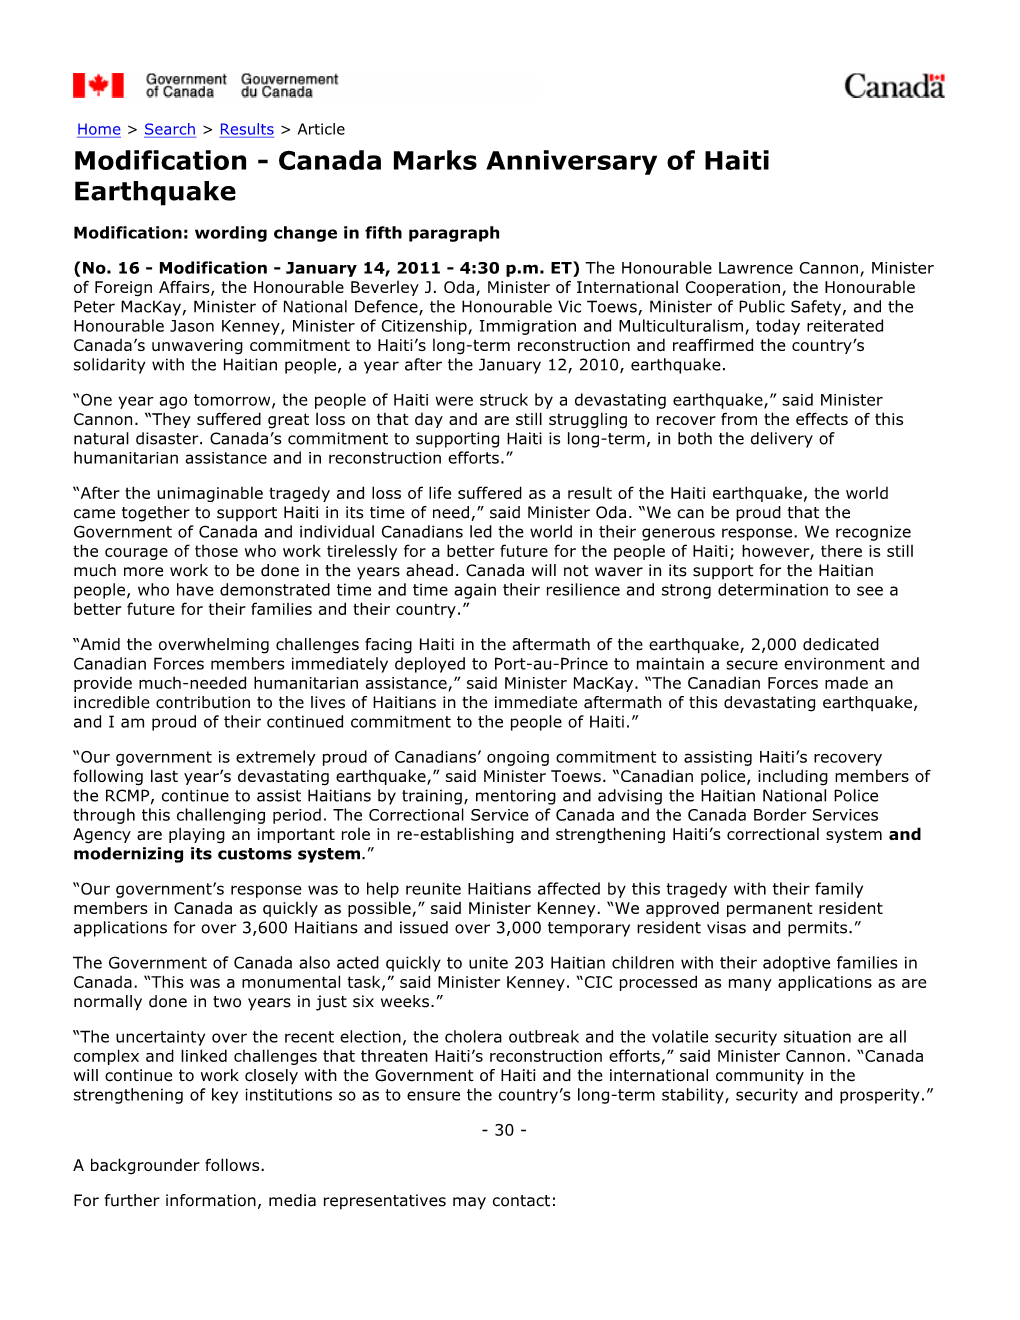 Modification - Canada Marks Anniversary of Haiti Earthquake